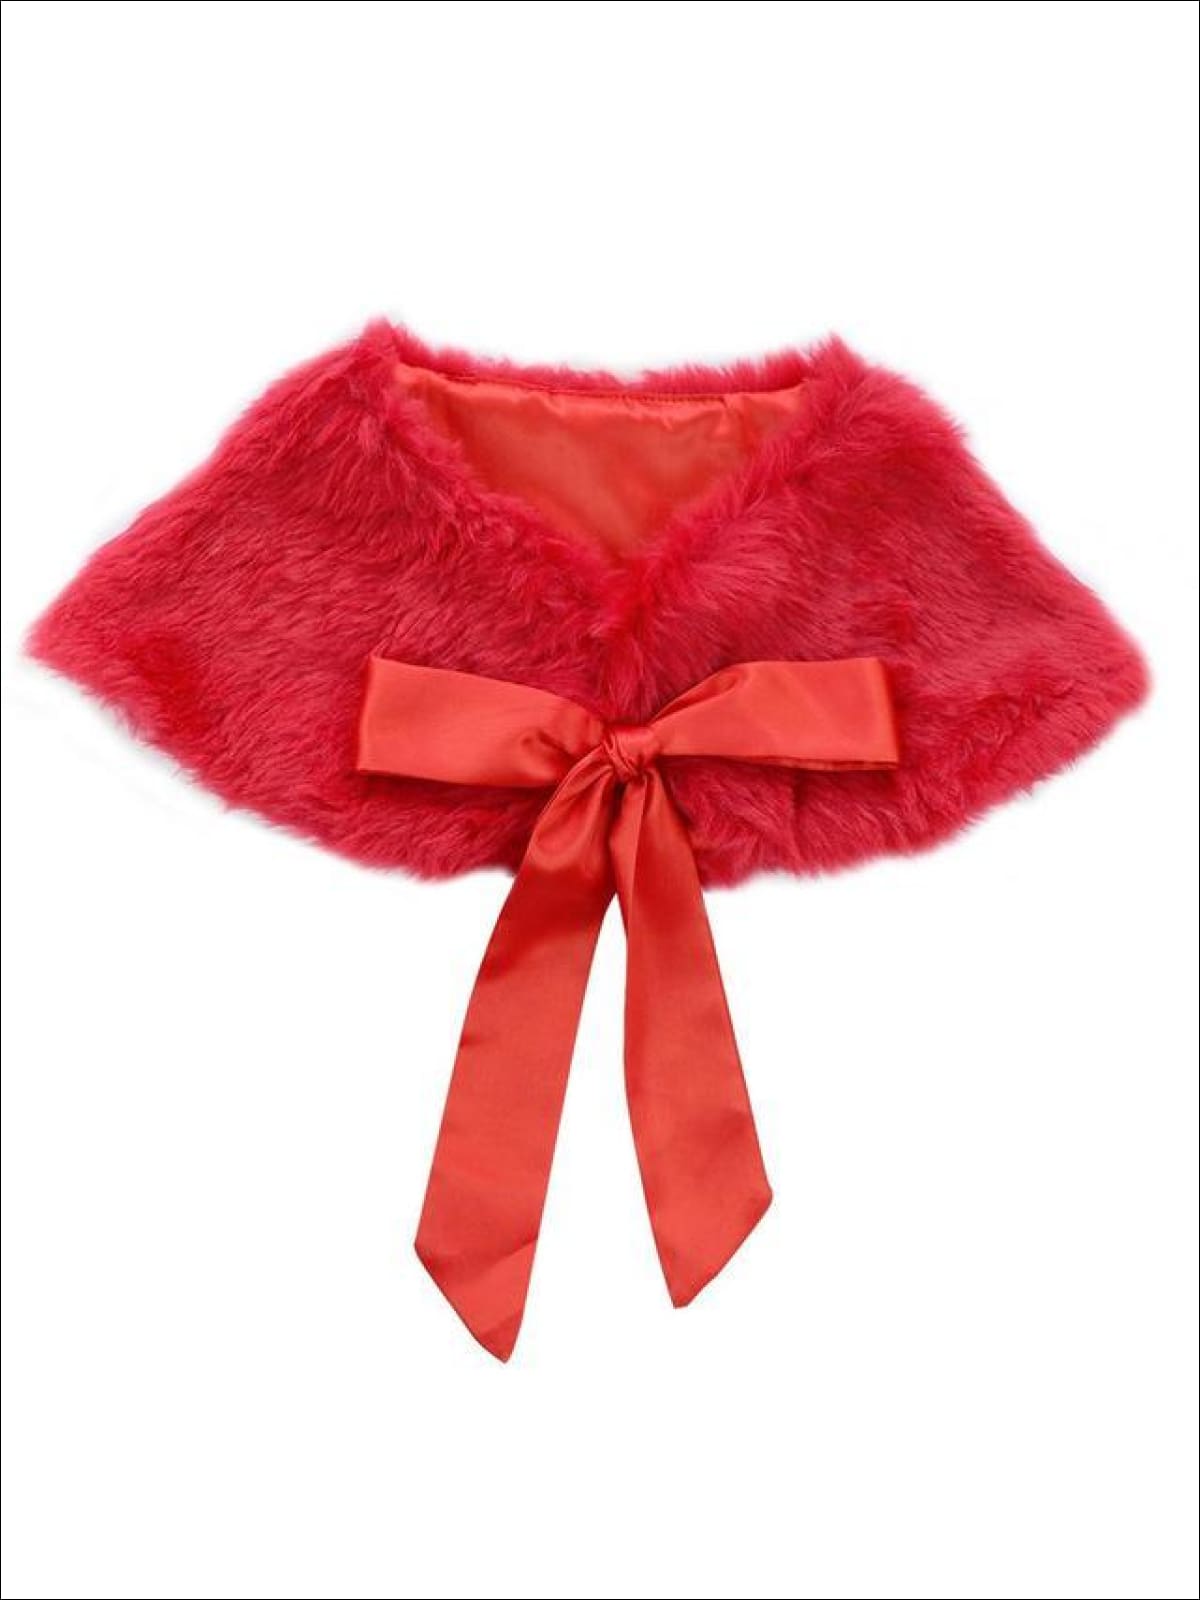 Girls Red Faux Fur Princess Cloak/Bolero - Red / breadth: 25cm/10.0 Length: 18cm/7.0 - Girls Halloween Costume